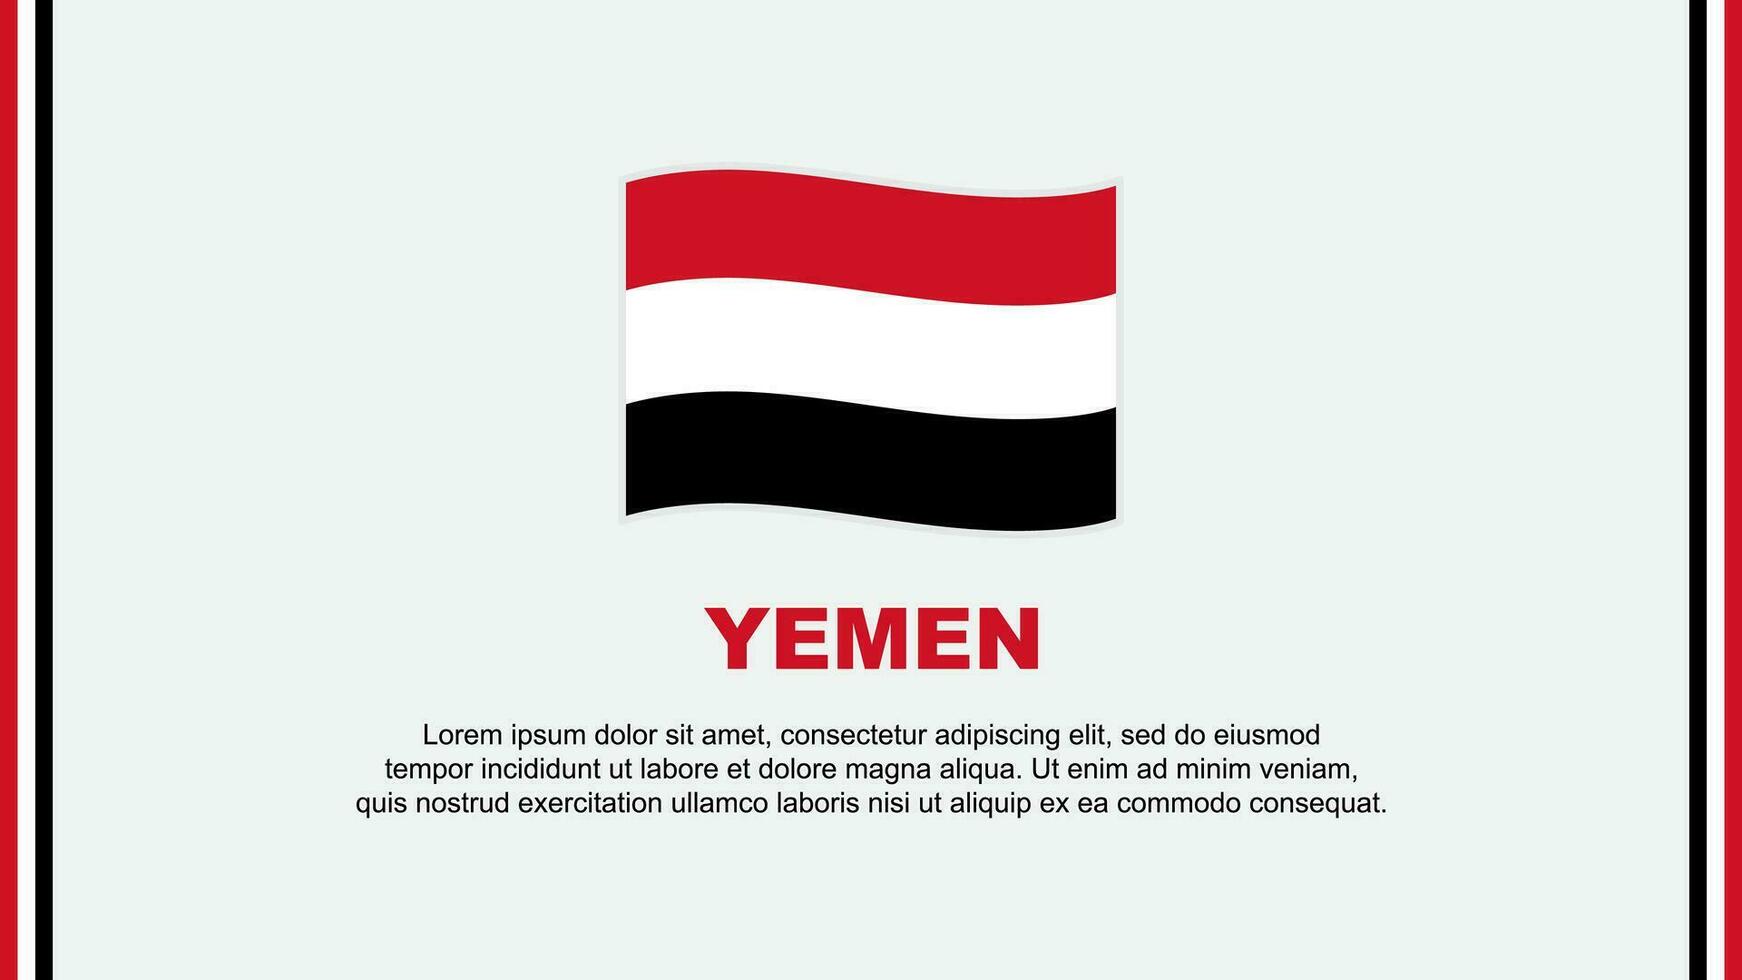 Yemen Flag Abstract Background Design Template. Yemen Independence Day Banner Social Media Vector Illustration. Yemen Cartoon